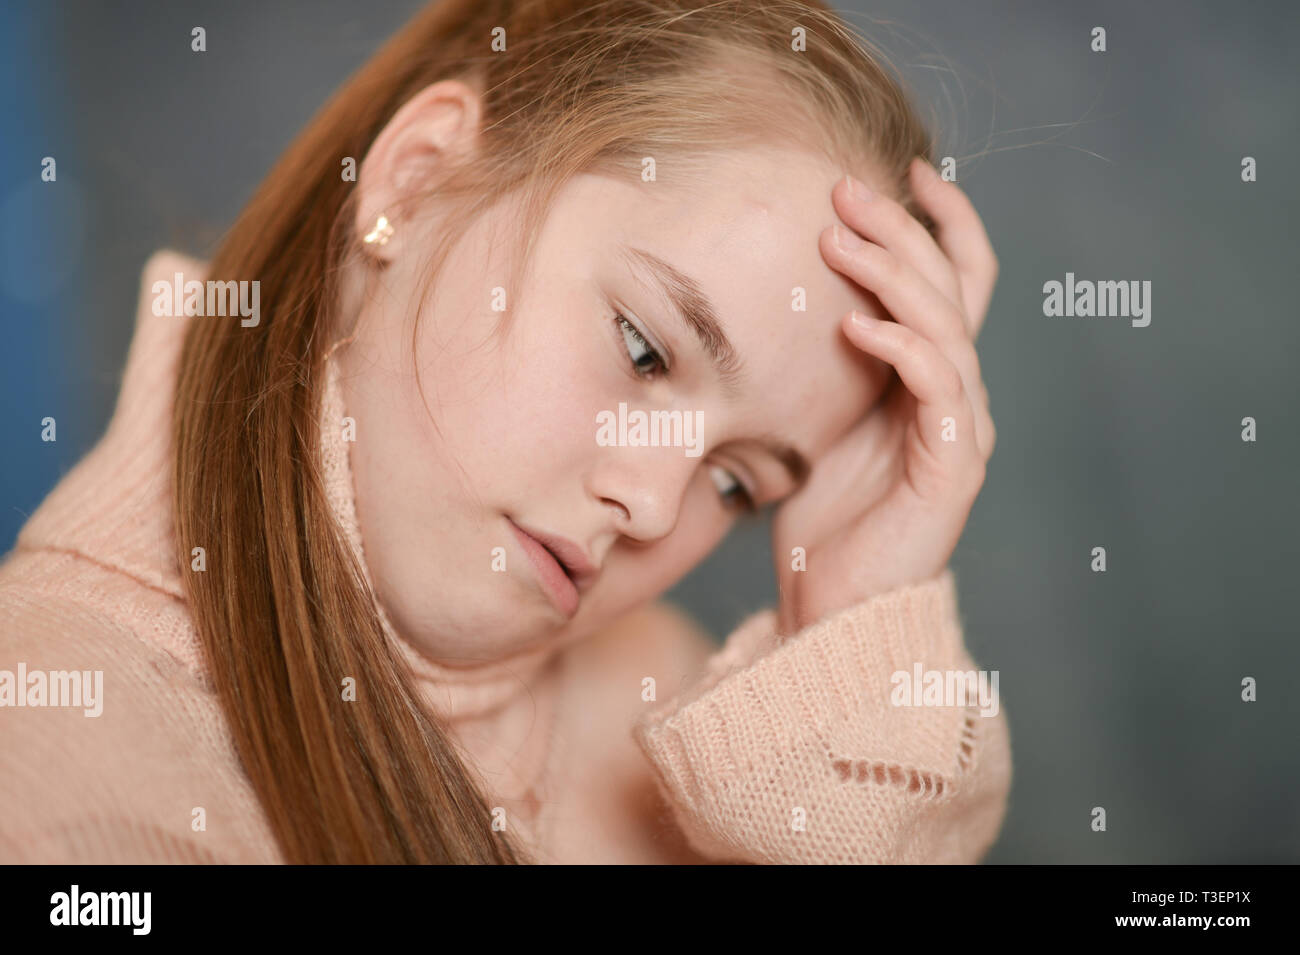 Close up portrait of sad sick girl suffering from illness Stock Photo